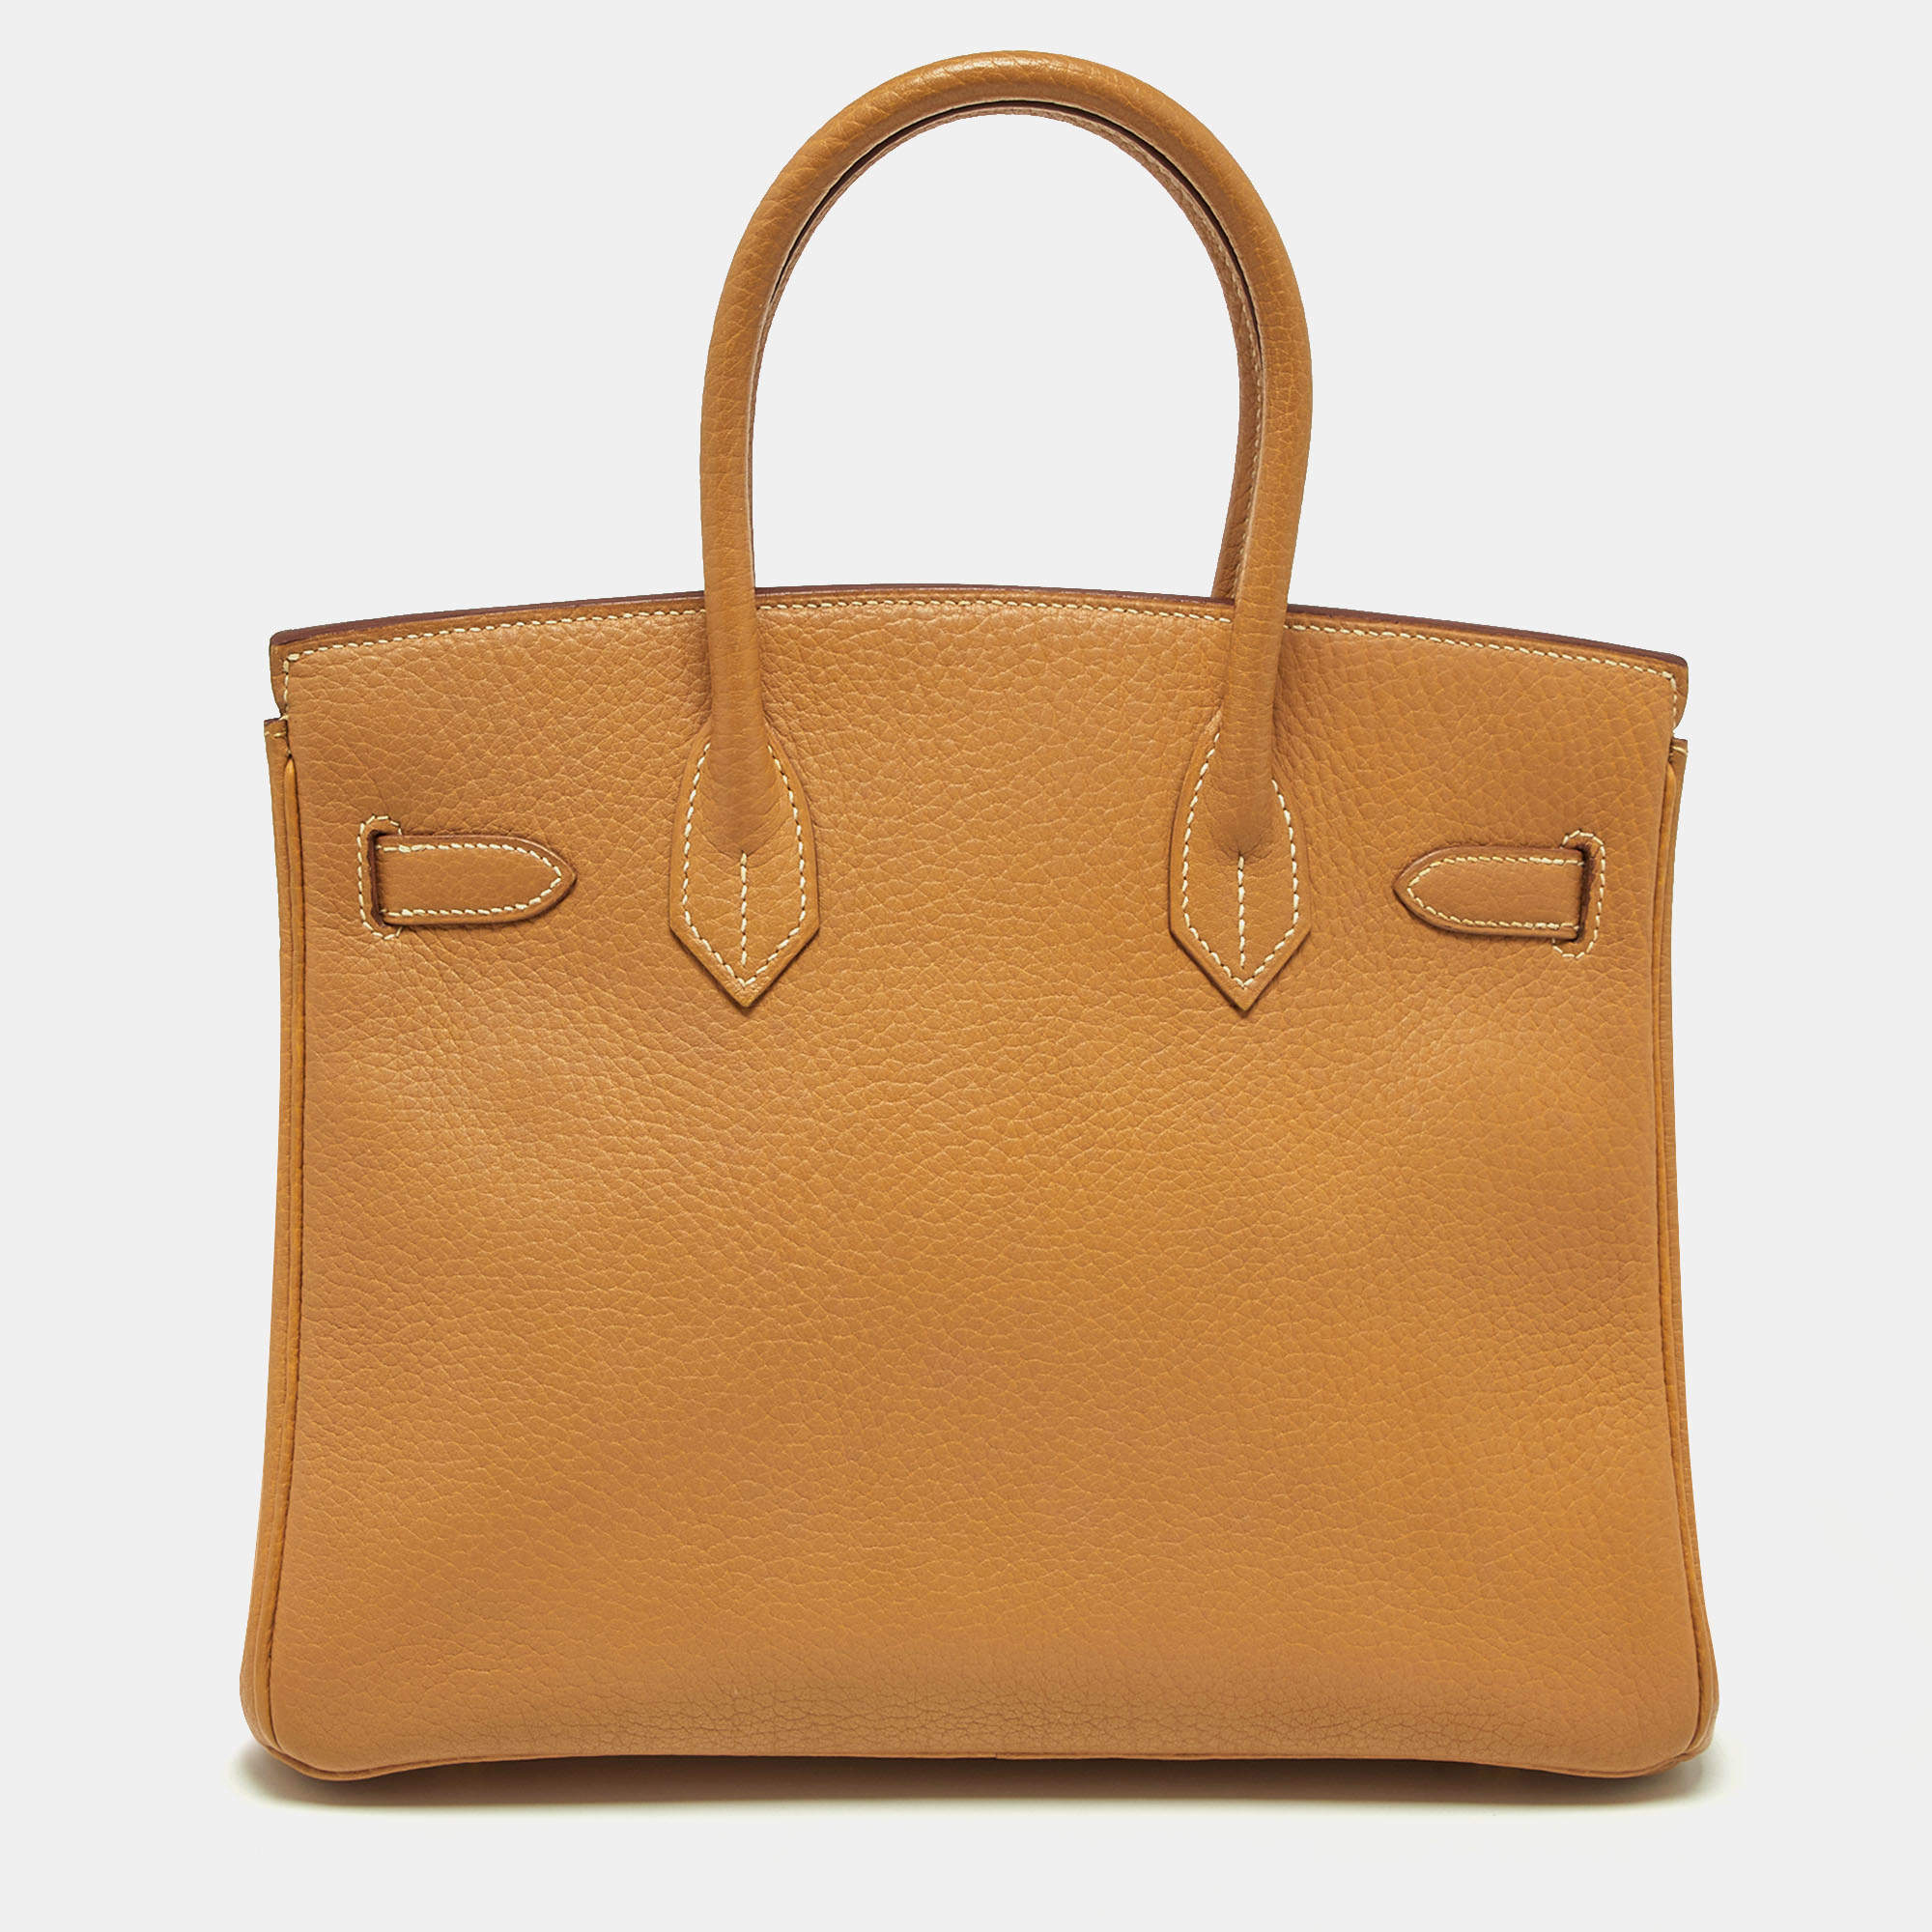 Hermes bag luxury  Bags, Leather bucket bag, Leather